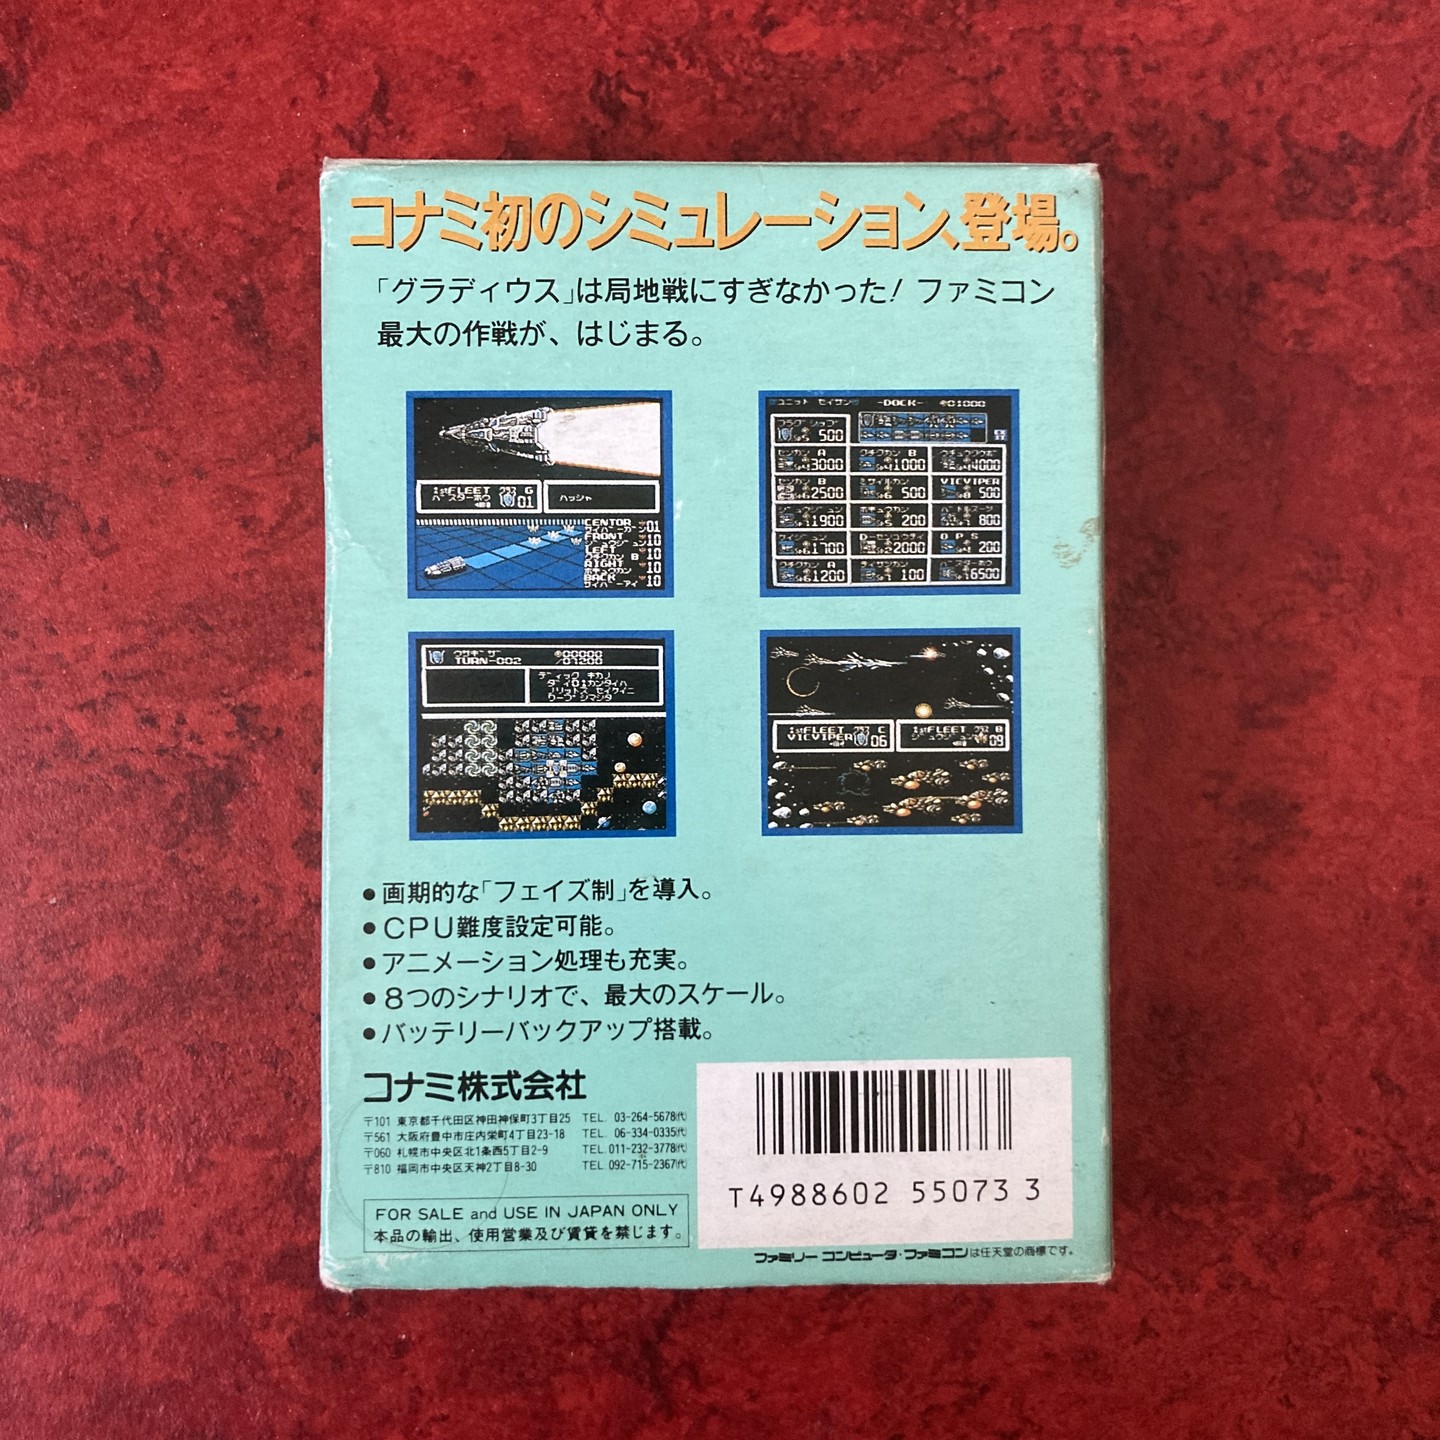 Cosmic Wars (Famicom)